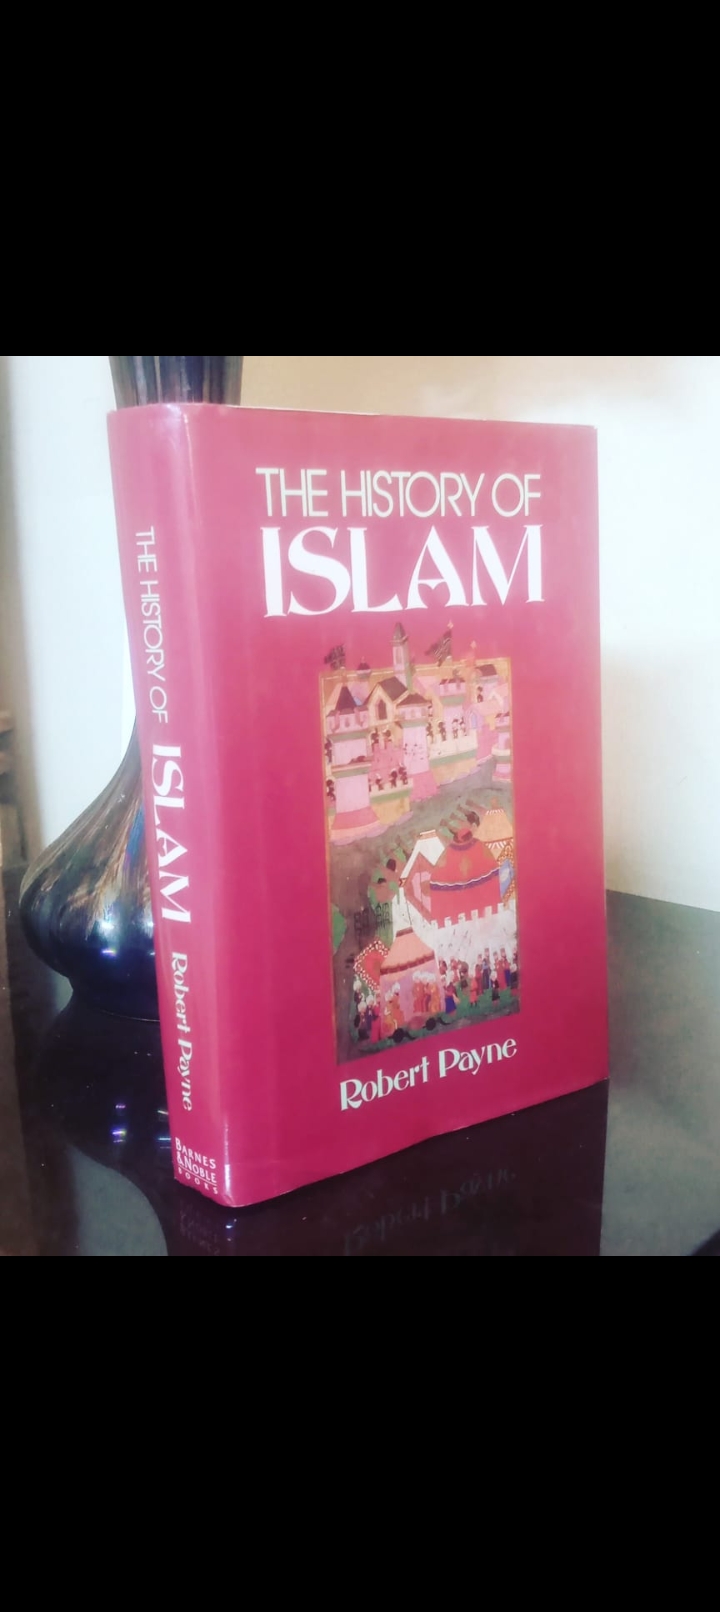 the history of islam by robert payne. original hardcover like new